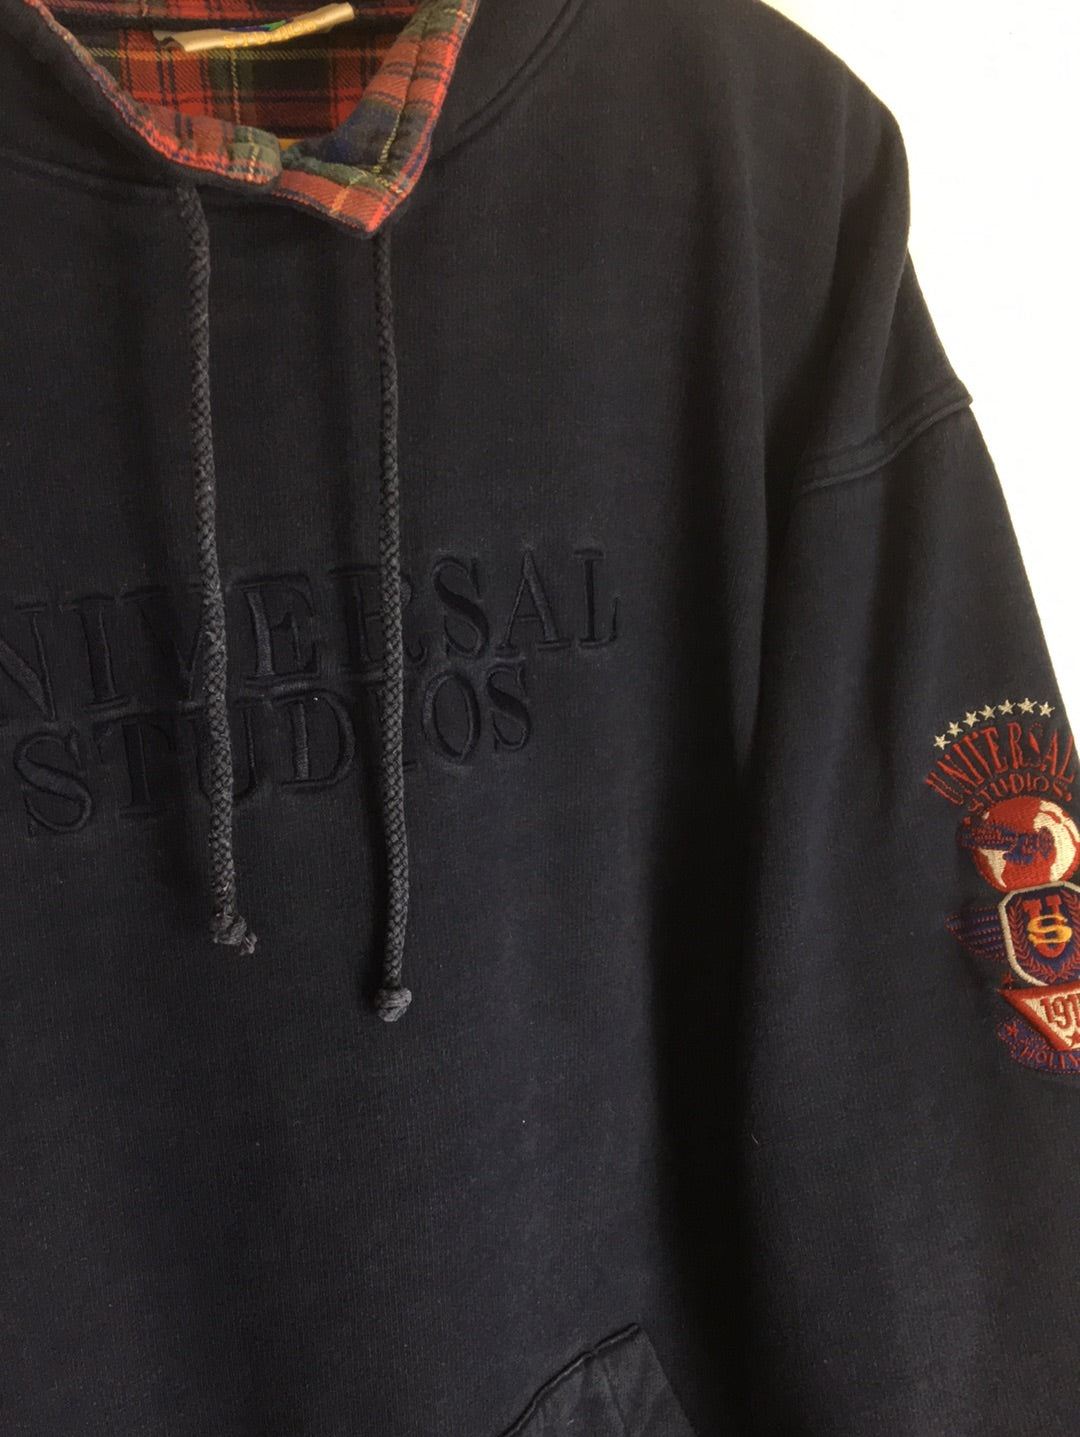 Universal Studios Sweater (L)